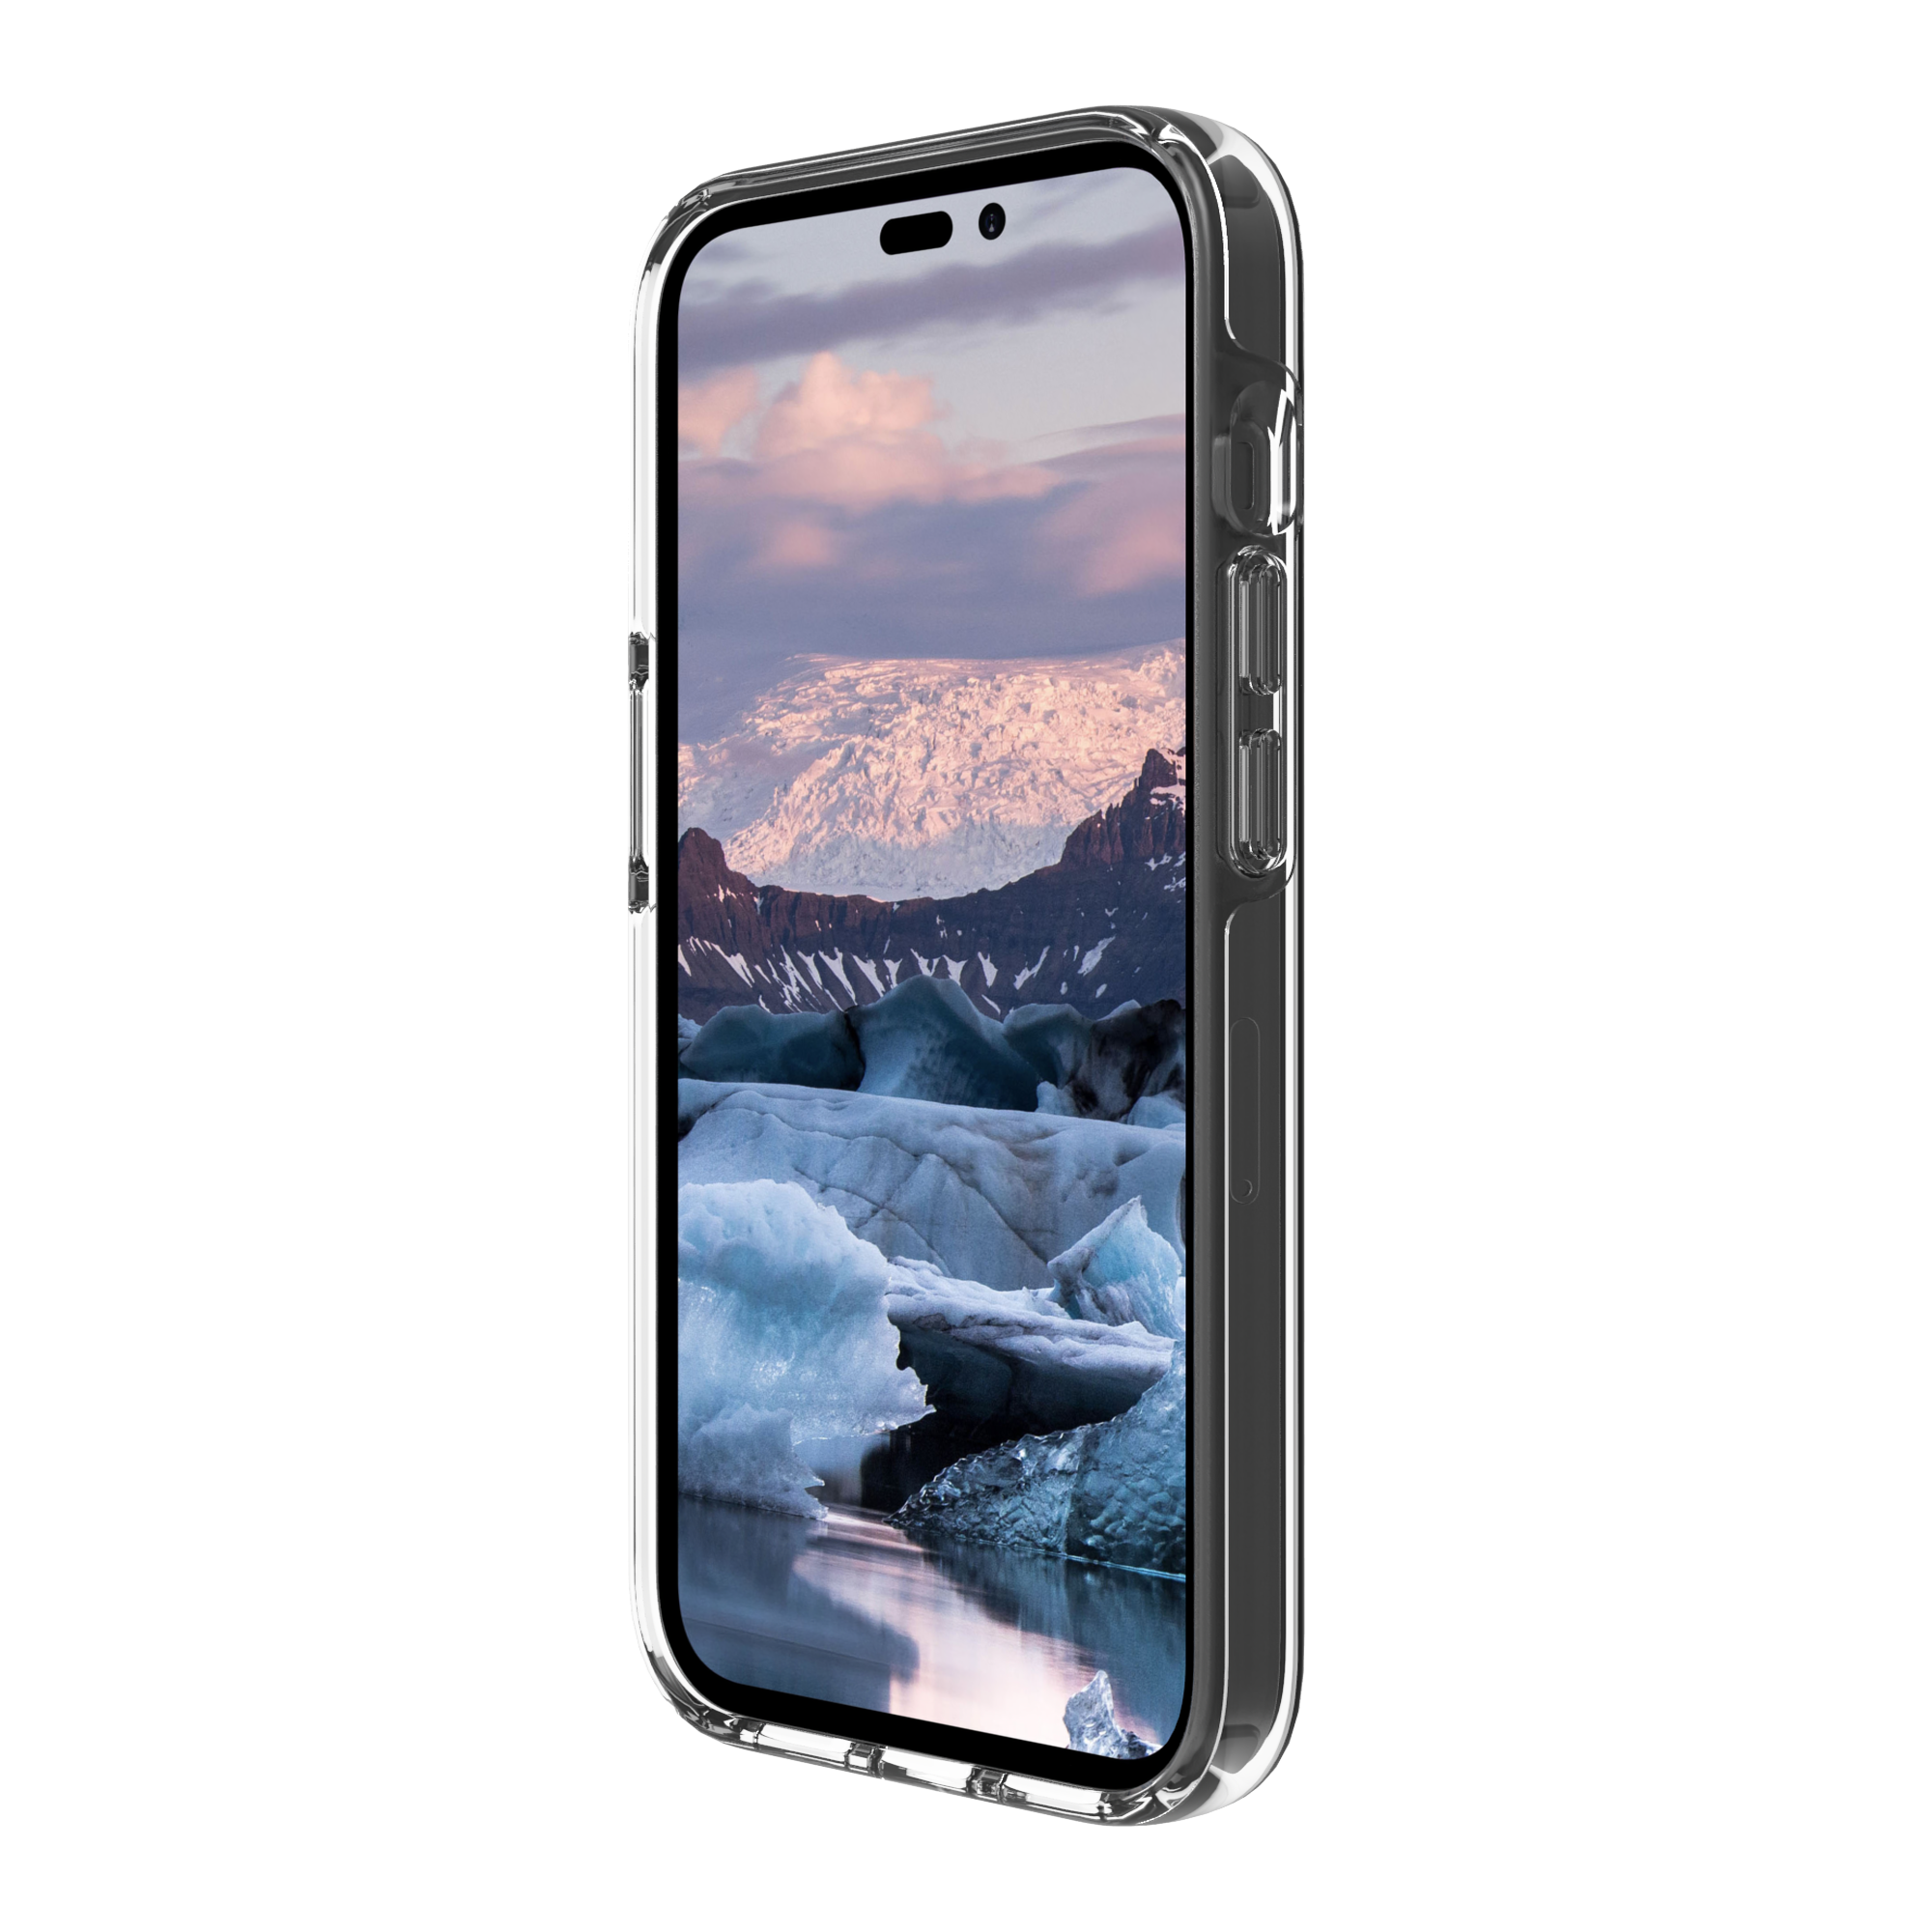 Bumper, Pro 14 MagSafe iPhone Transparent Transparent, Iceland Pro, Apple, 14 DBRAMANTE iPhone Pro